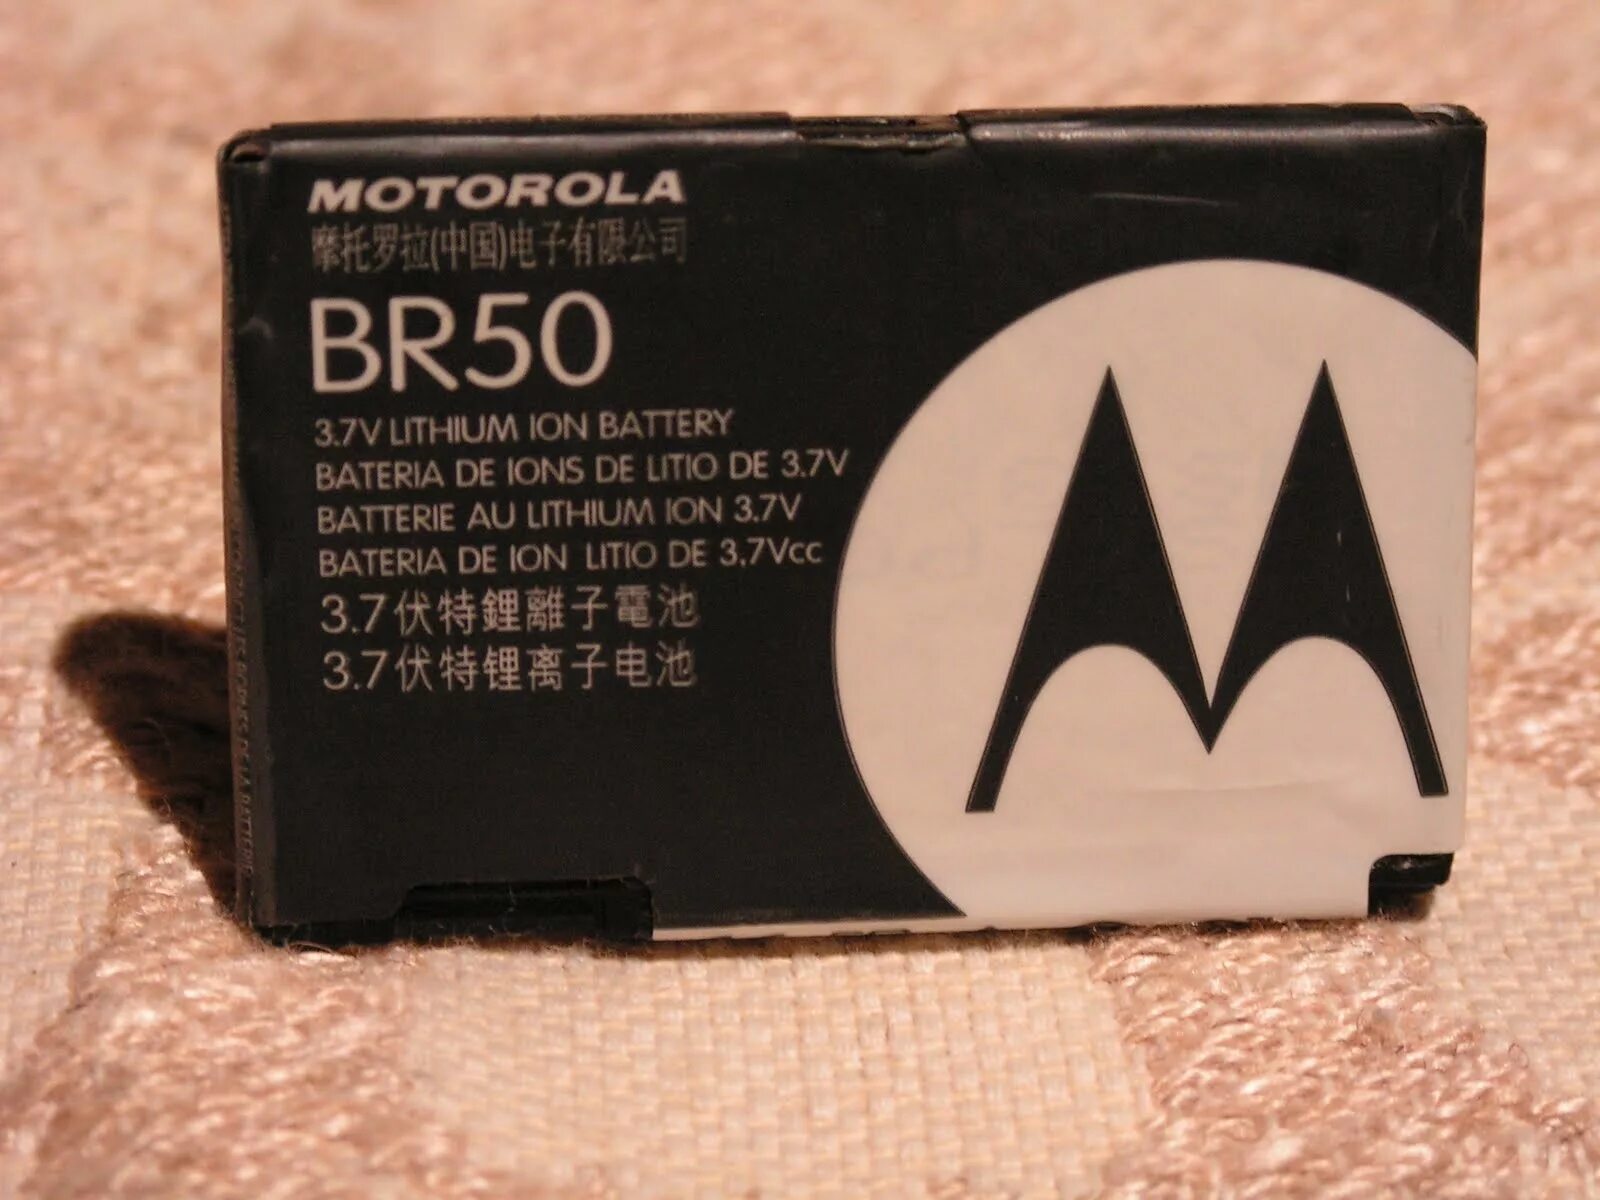 Battery 50. Аккумулятор Моторола br50. Аккумулятор для телефона Motorola br50. Батарейка br50 Motorola. Motorola br50 3.7.